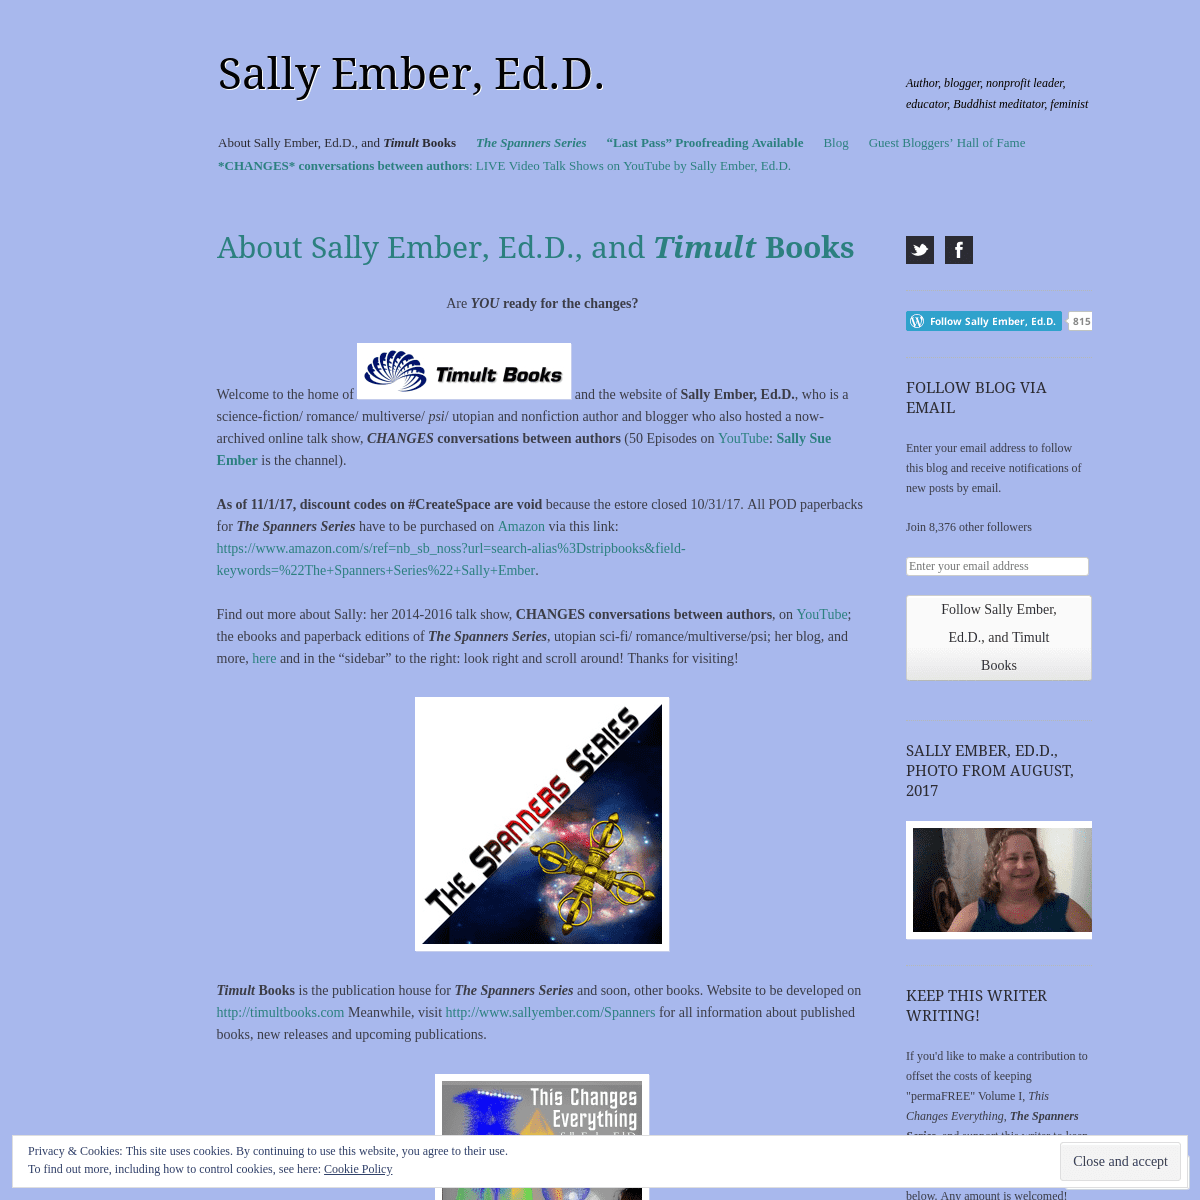 A complete backup of sallyember.wordpress.com